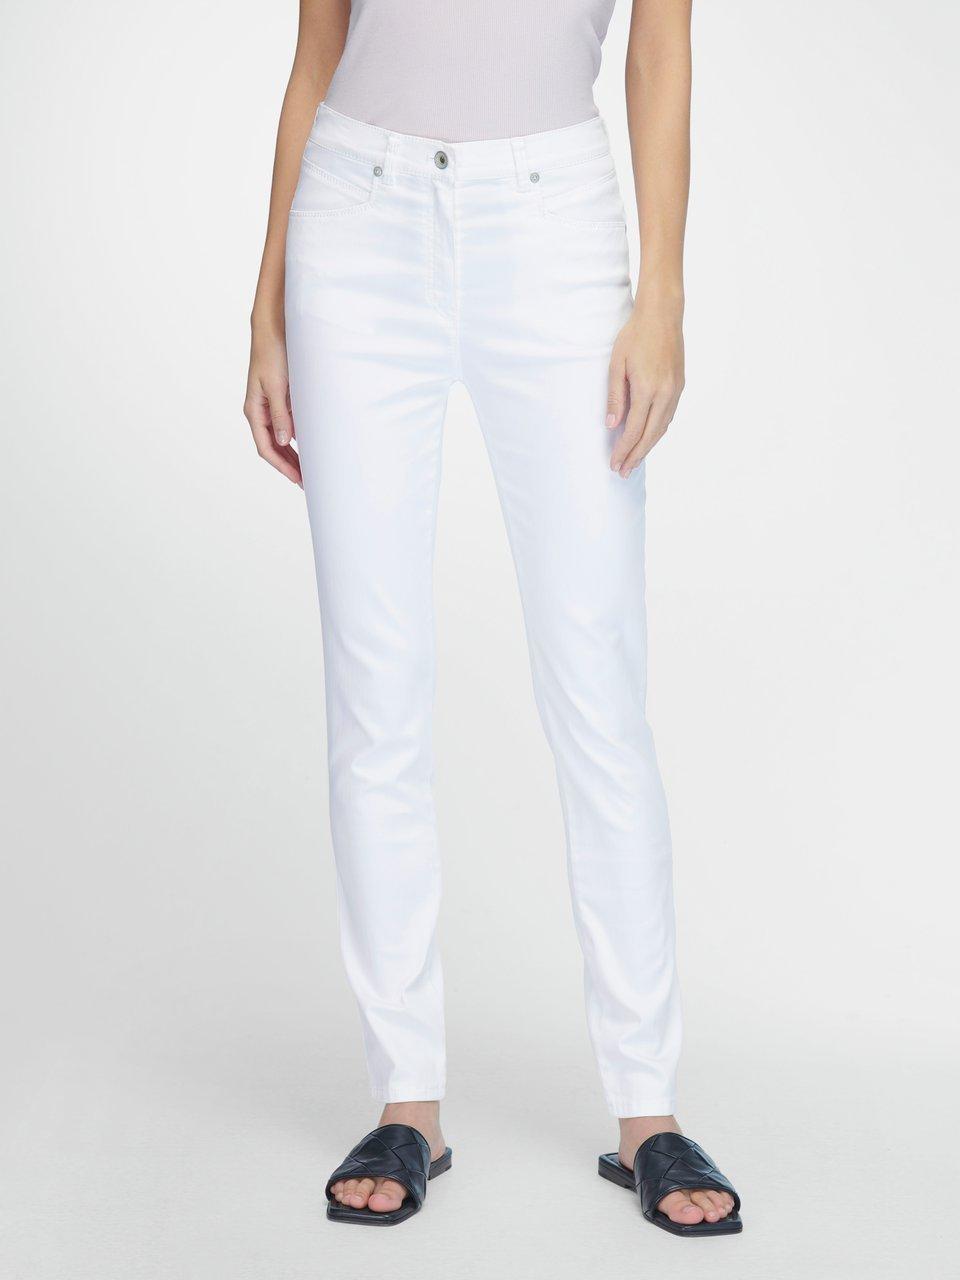 Raphaela by Brax - Comfort Plus jeans model Caren